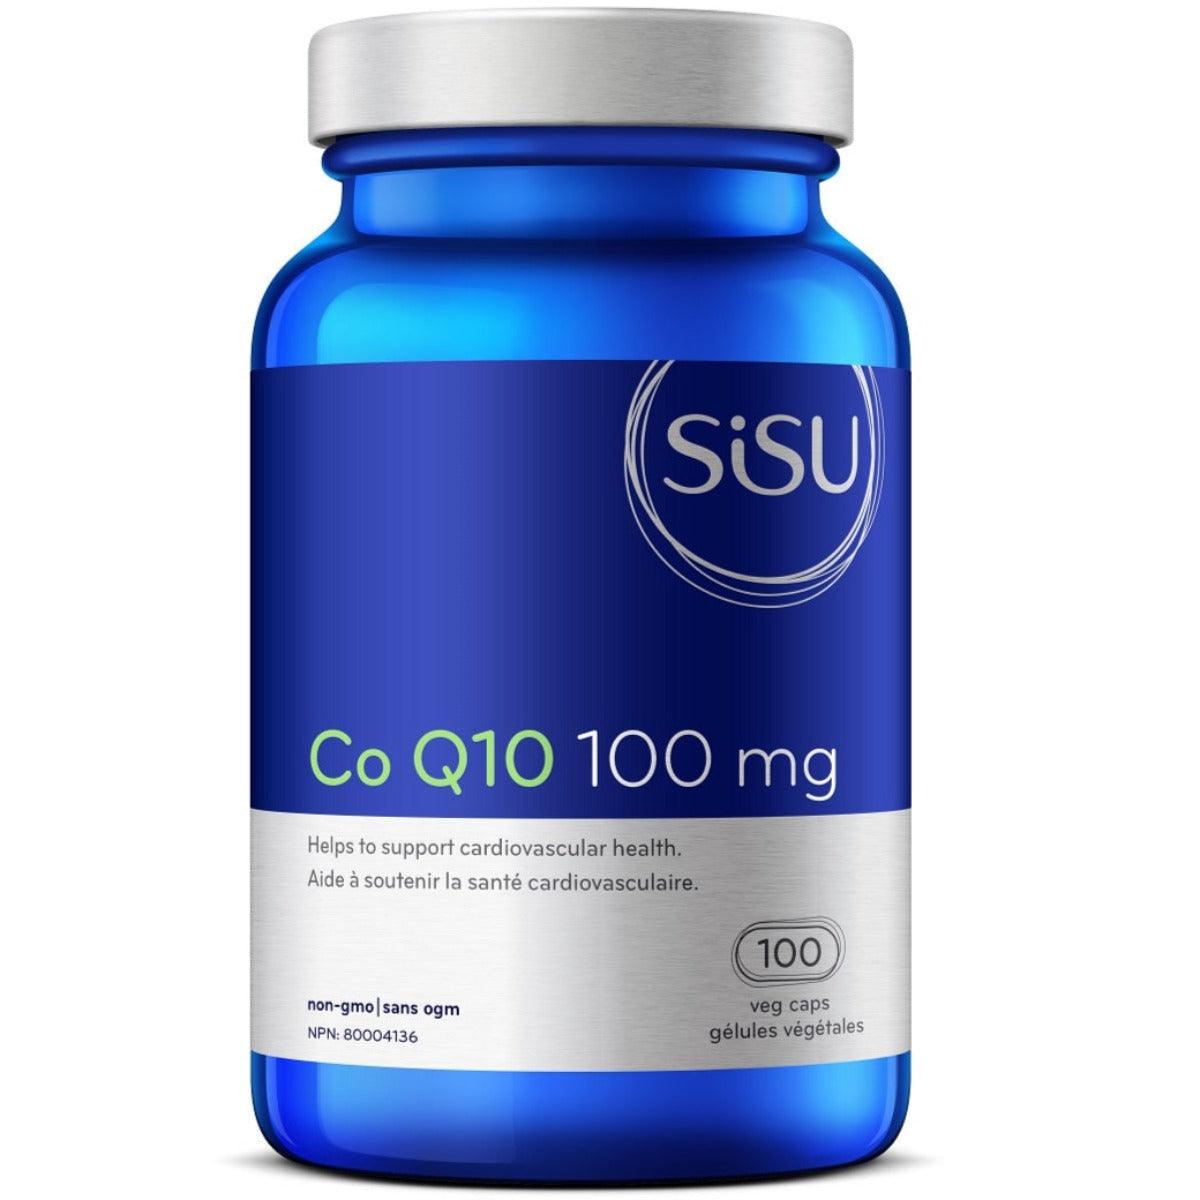 Sisu Co Q10 100 mg 100 Veggie Caps Supplements - Cardiovascular Health at Village Vitamin Store